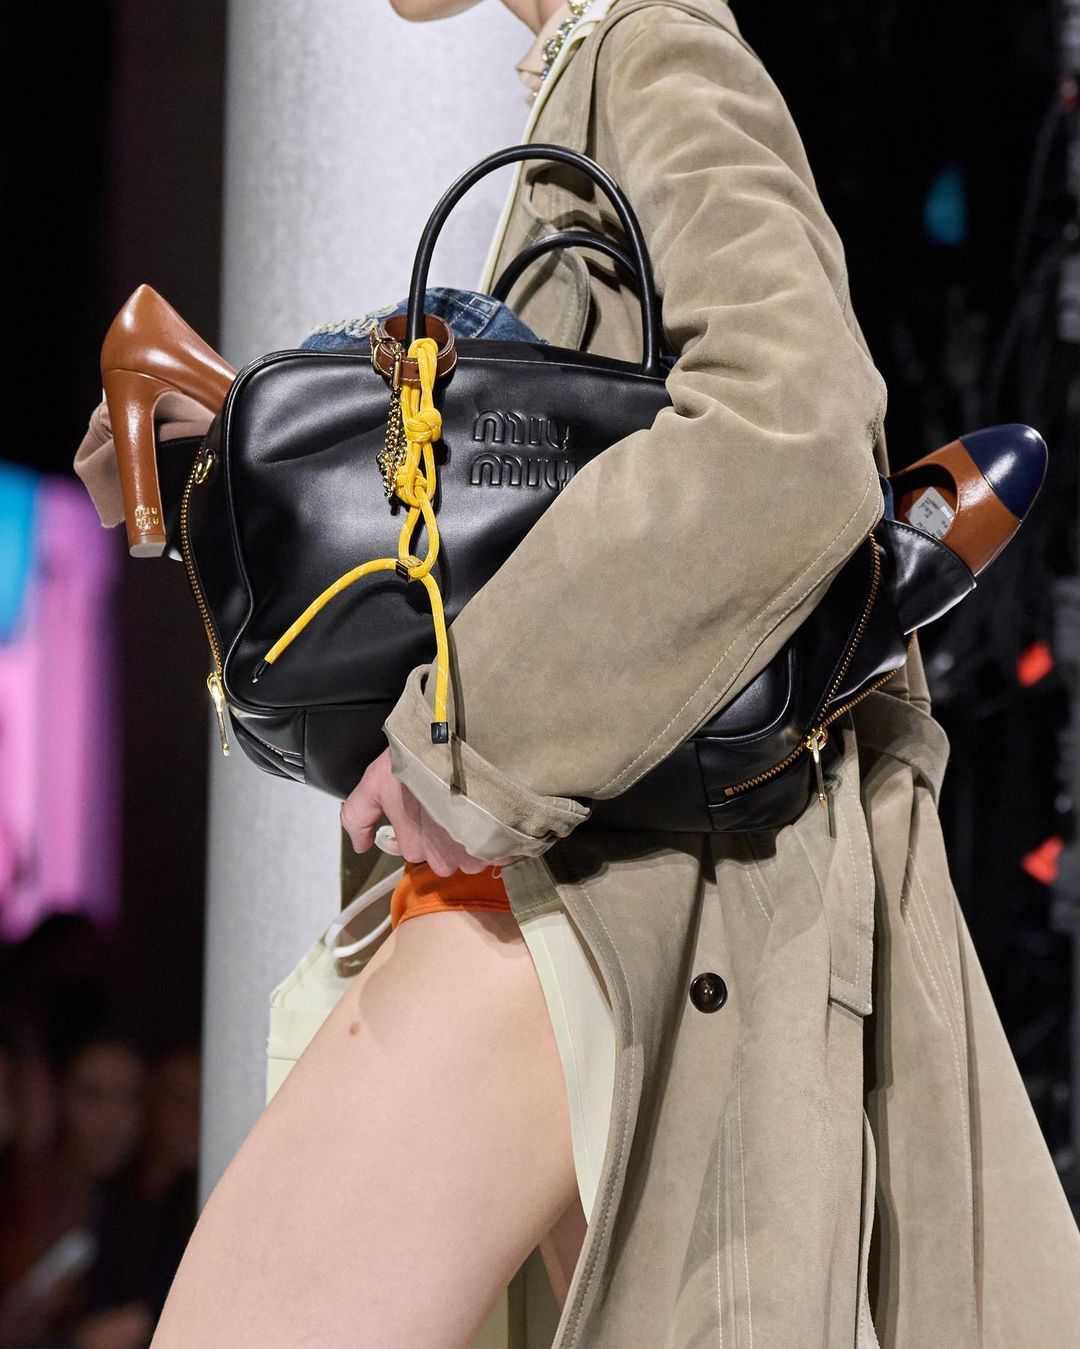 Balenciaga & Miu Miu's Overaccessorized Handbags Are Fashion